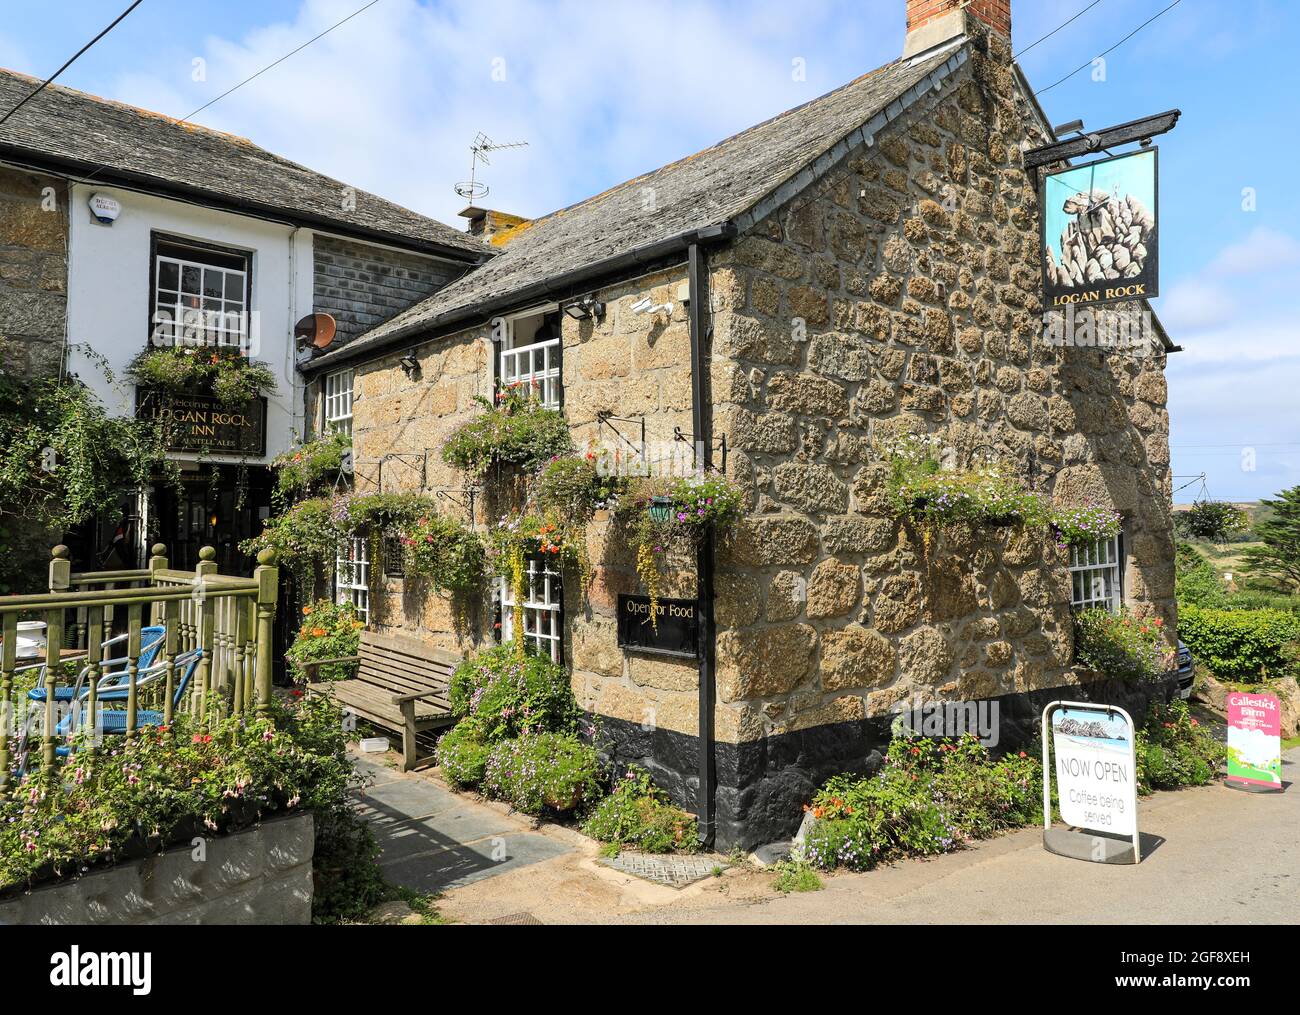 The Logan Rock Inn, a 16th century traditional village pub or public house, Treen, Cornwall, England, UK Stock Photo